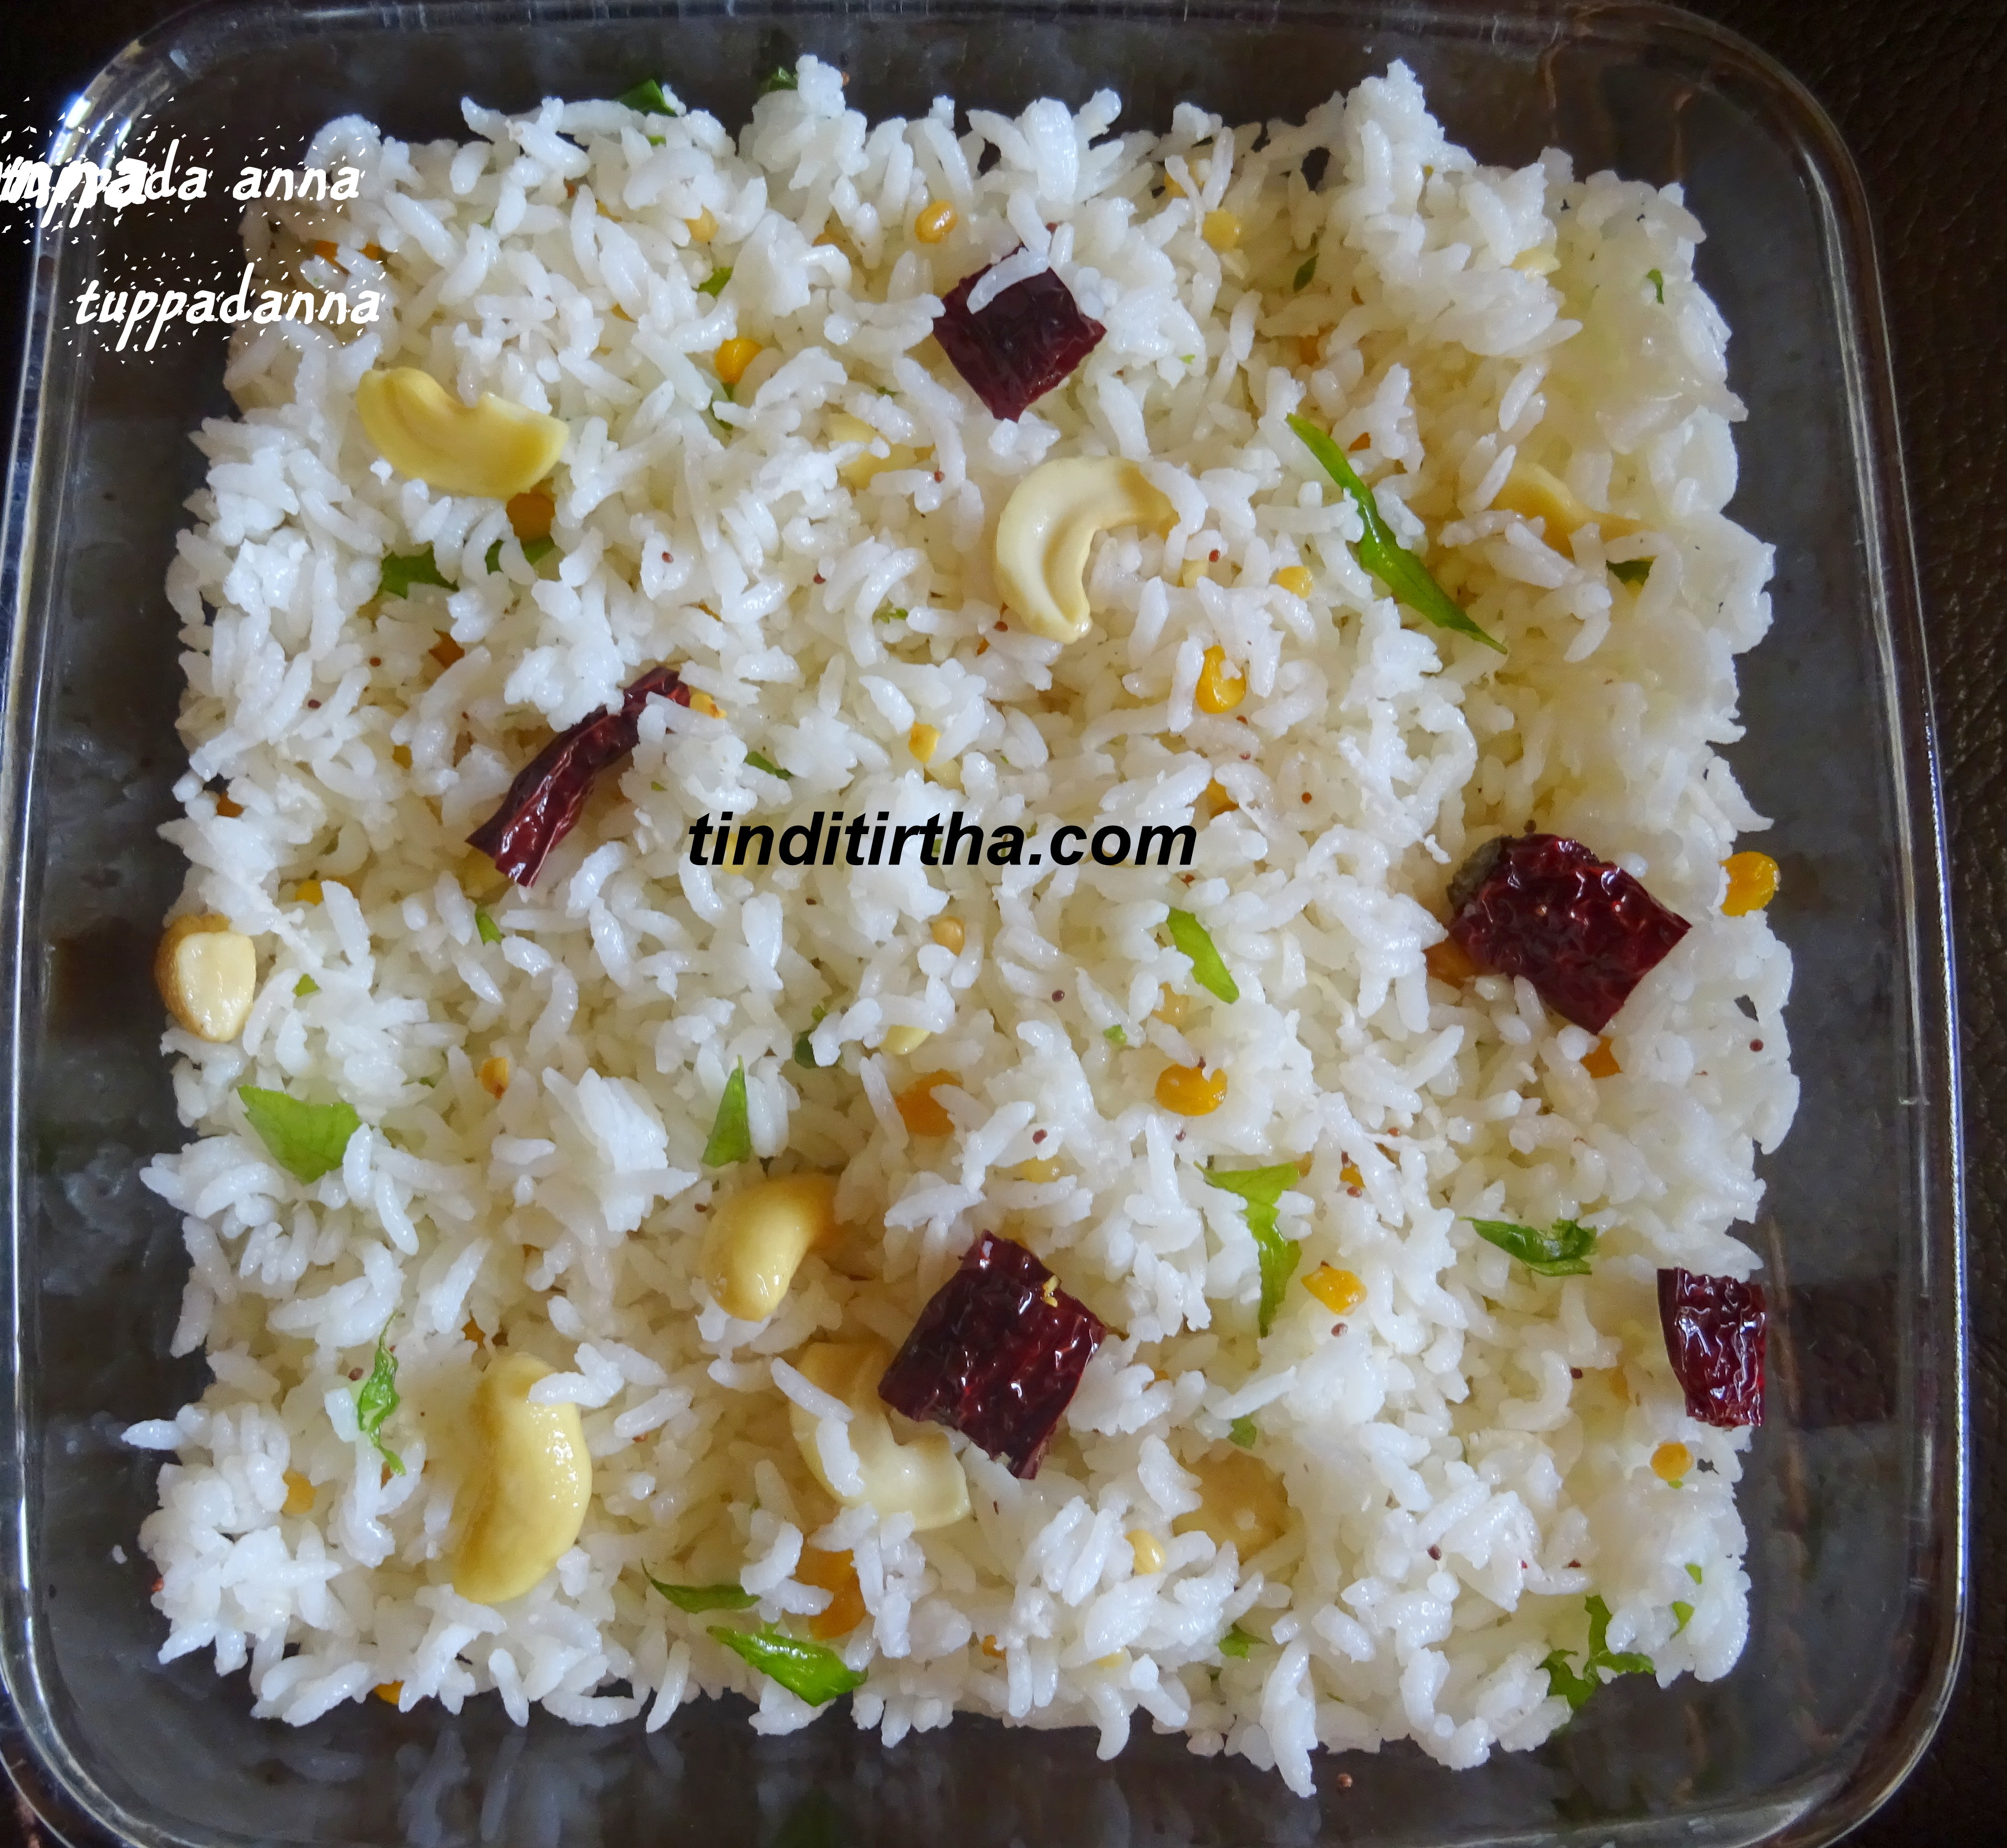 TUPPDANNA/TUPPADA ANNA……. cooked rice tempered with ghee